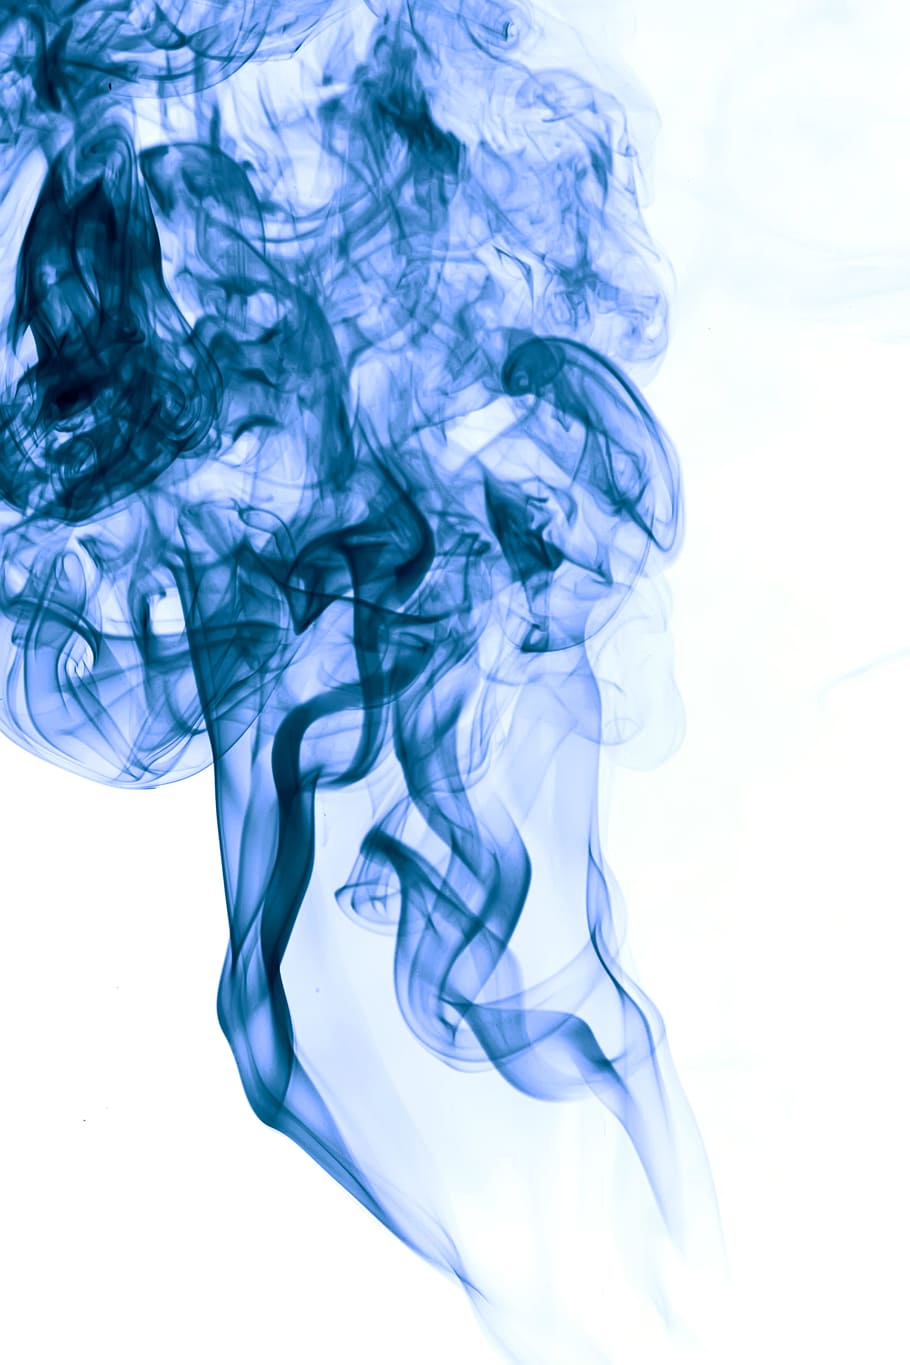 resumo, aromaterapia, plano de fundo, cor, cheiro, fumaça, movimento, tiro do estúdio, fumaça - estrutura física, azul